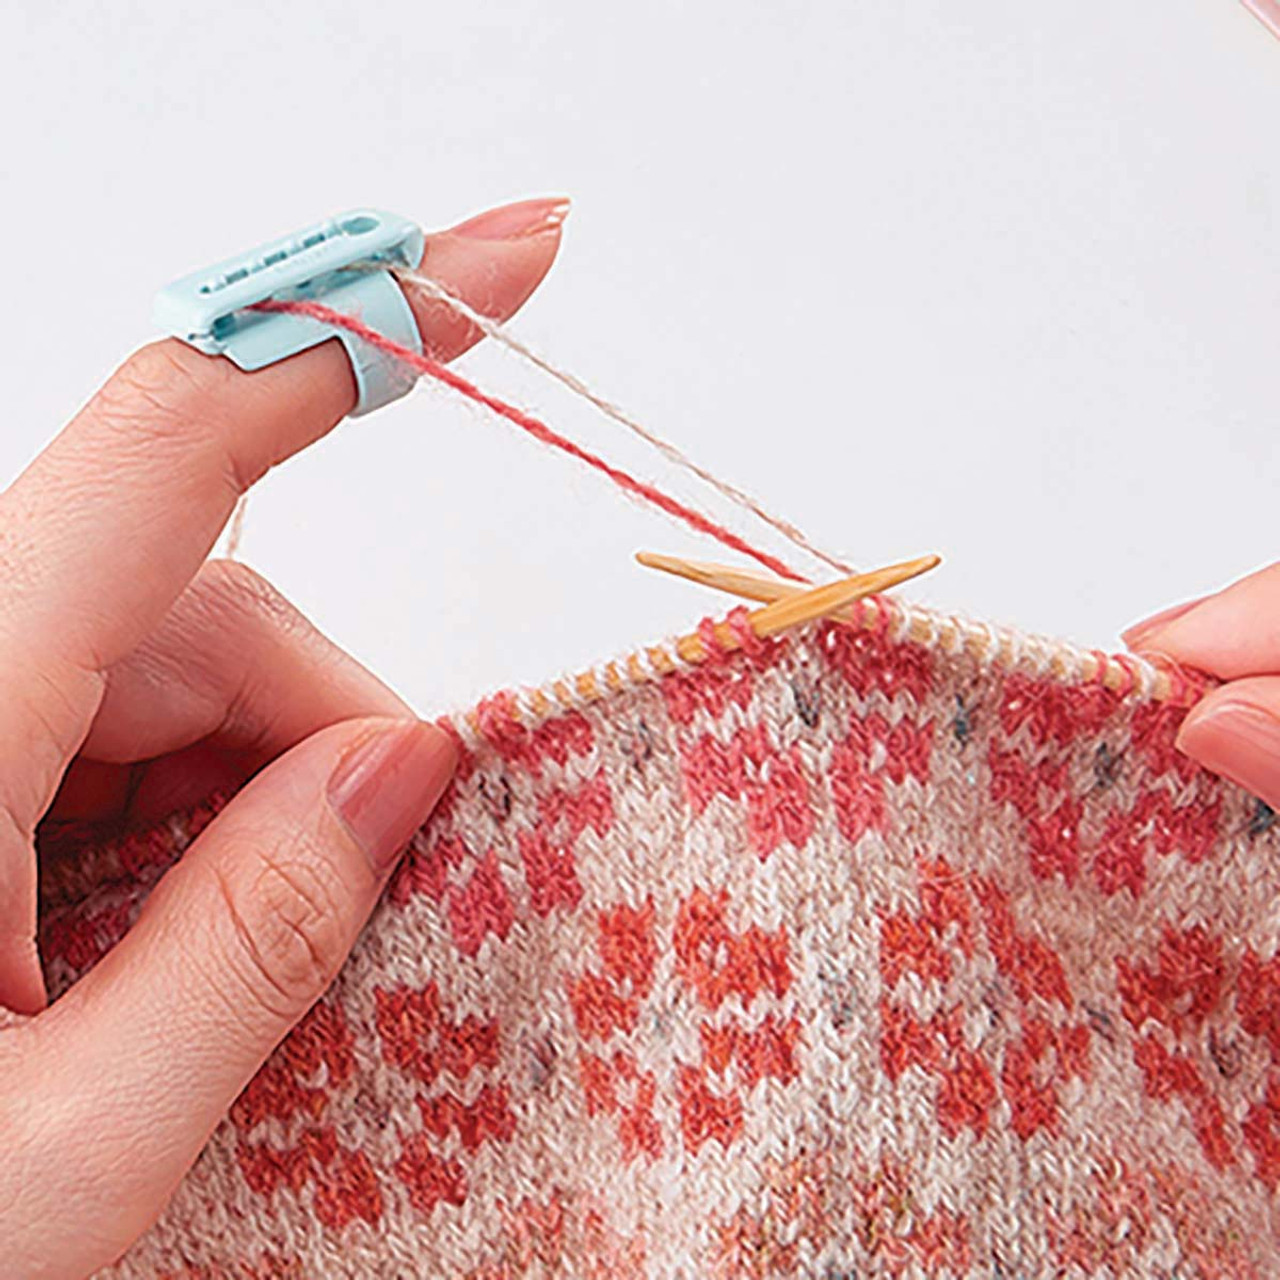 Clover Knitting Hook Crochet Clover Beads Needle With Free Shipping Clover  Crochet Hooks Crochet Clover Needles